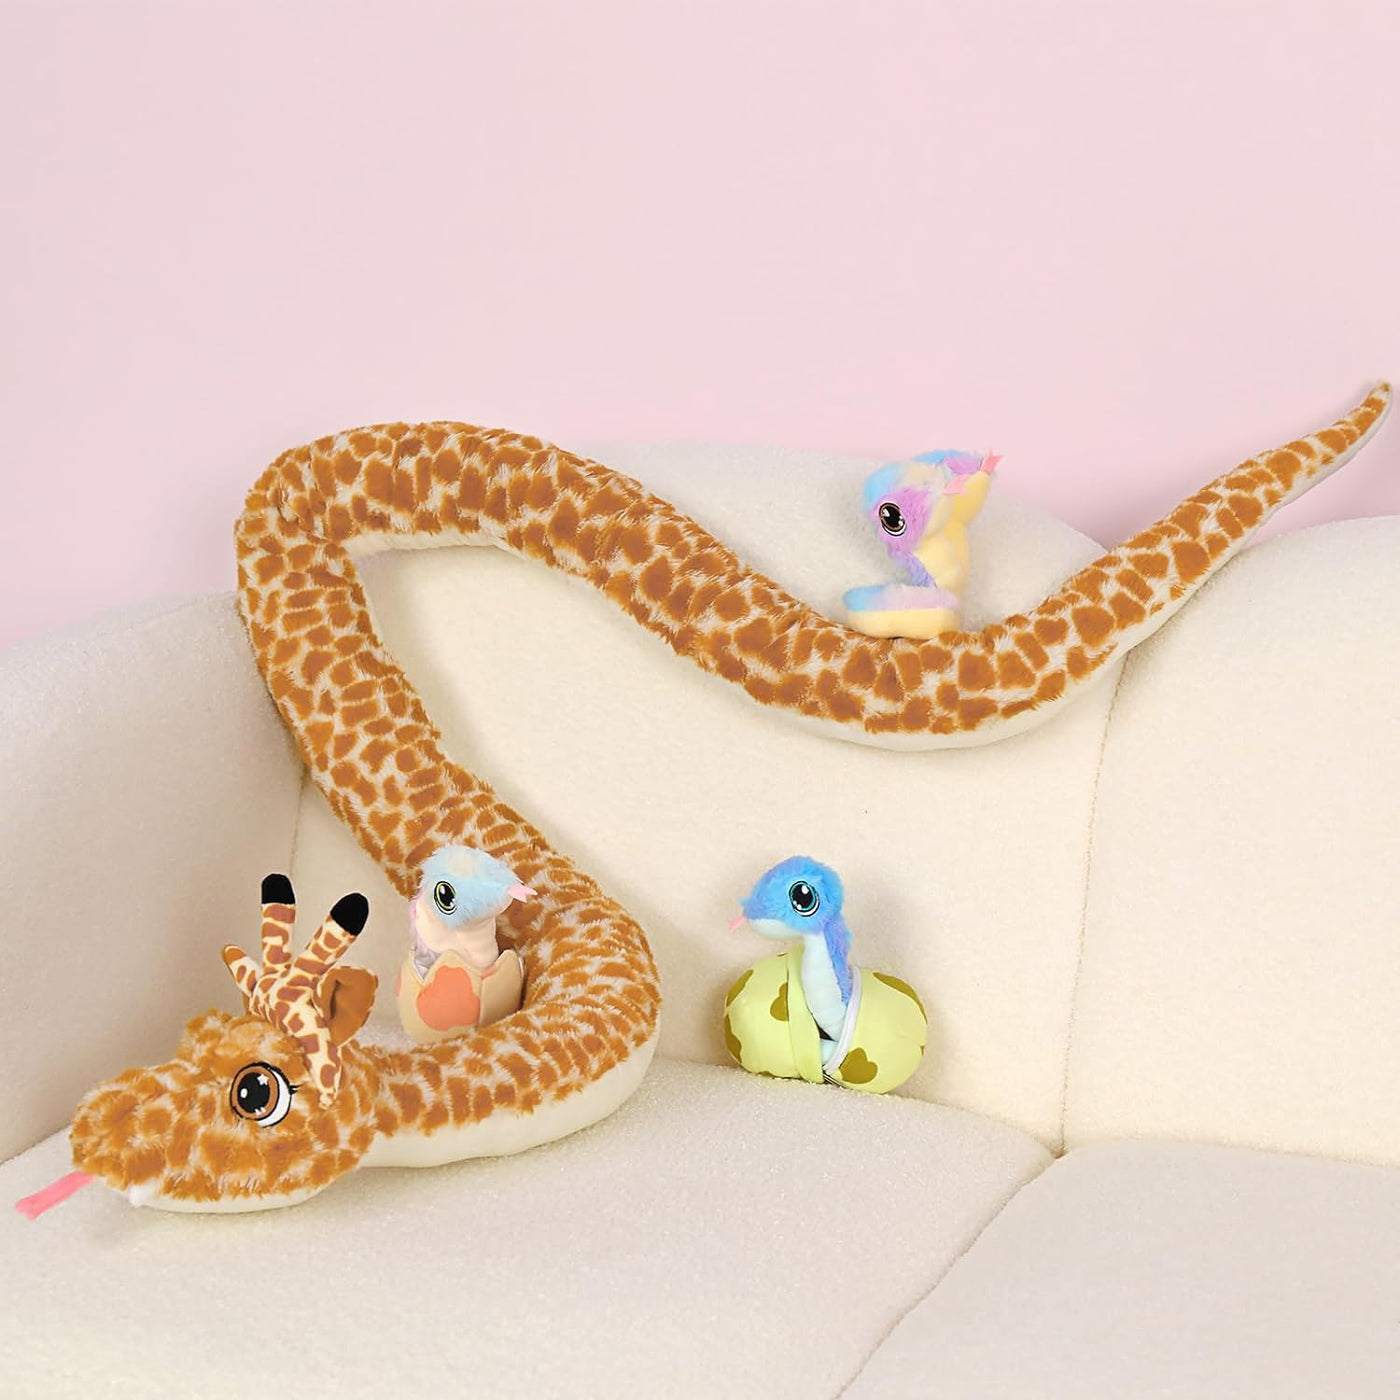 Giant Snake Stuffed Animal Toy Set, Green/Yellow - MorisMos Stuffed Animals